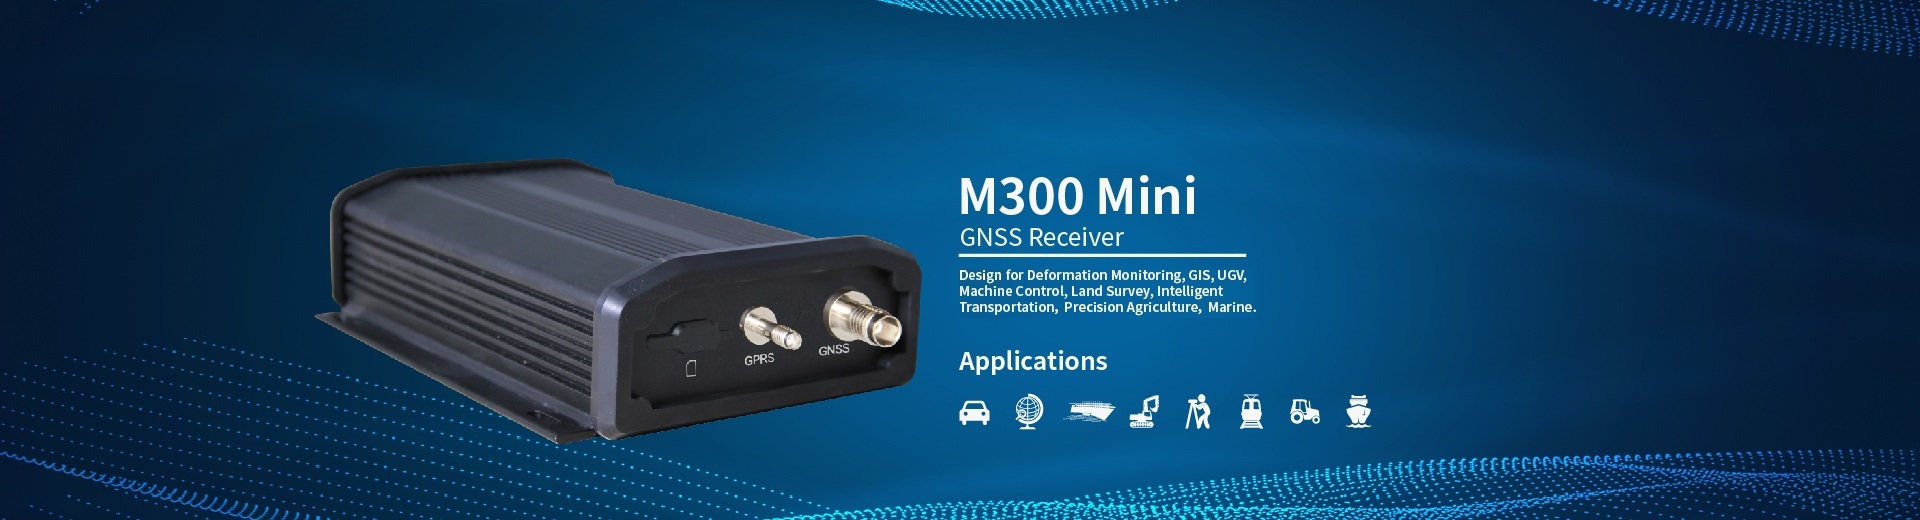 M300 Mini GNSS Receiver